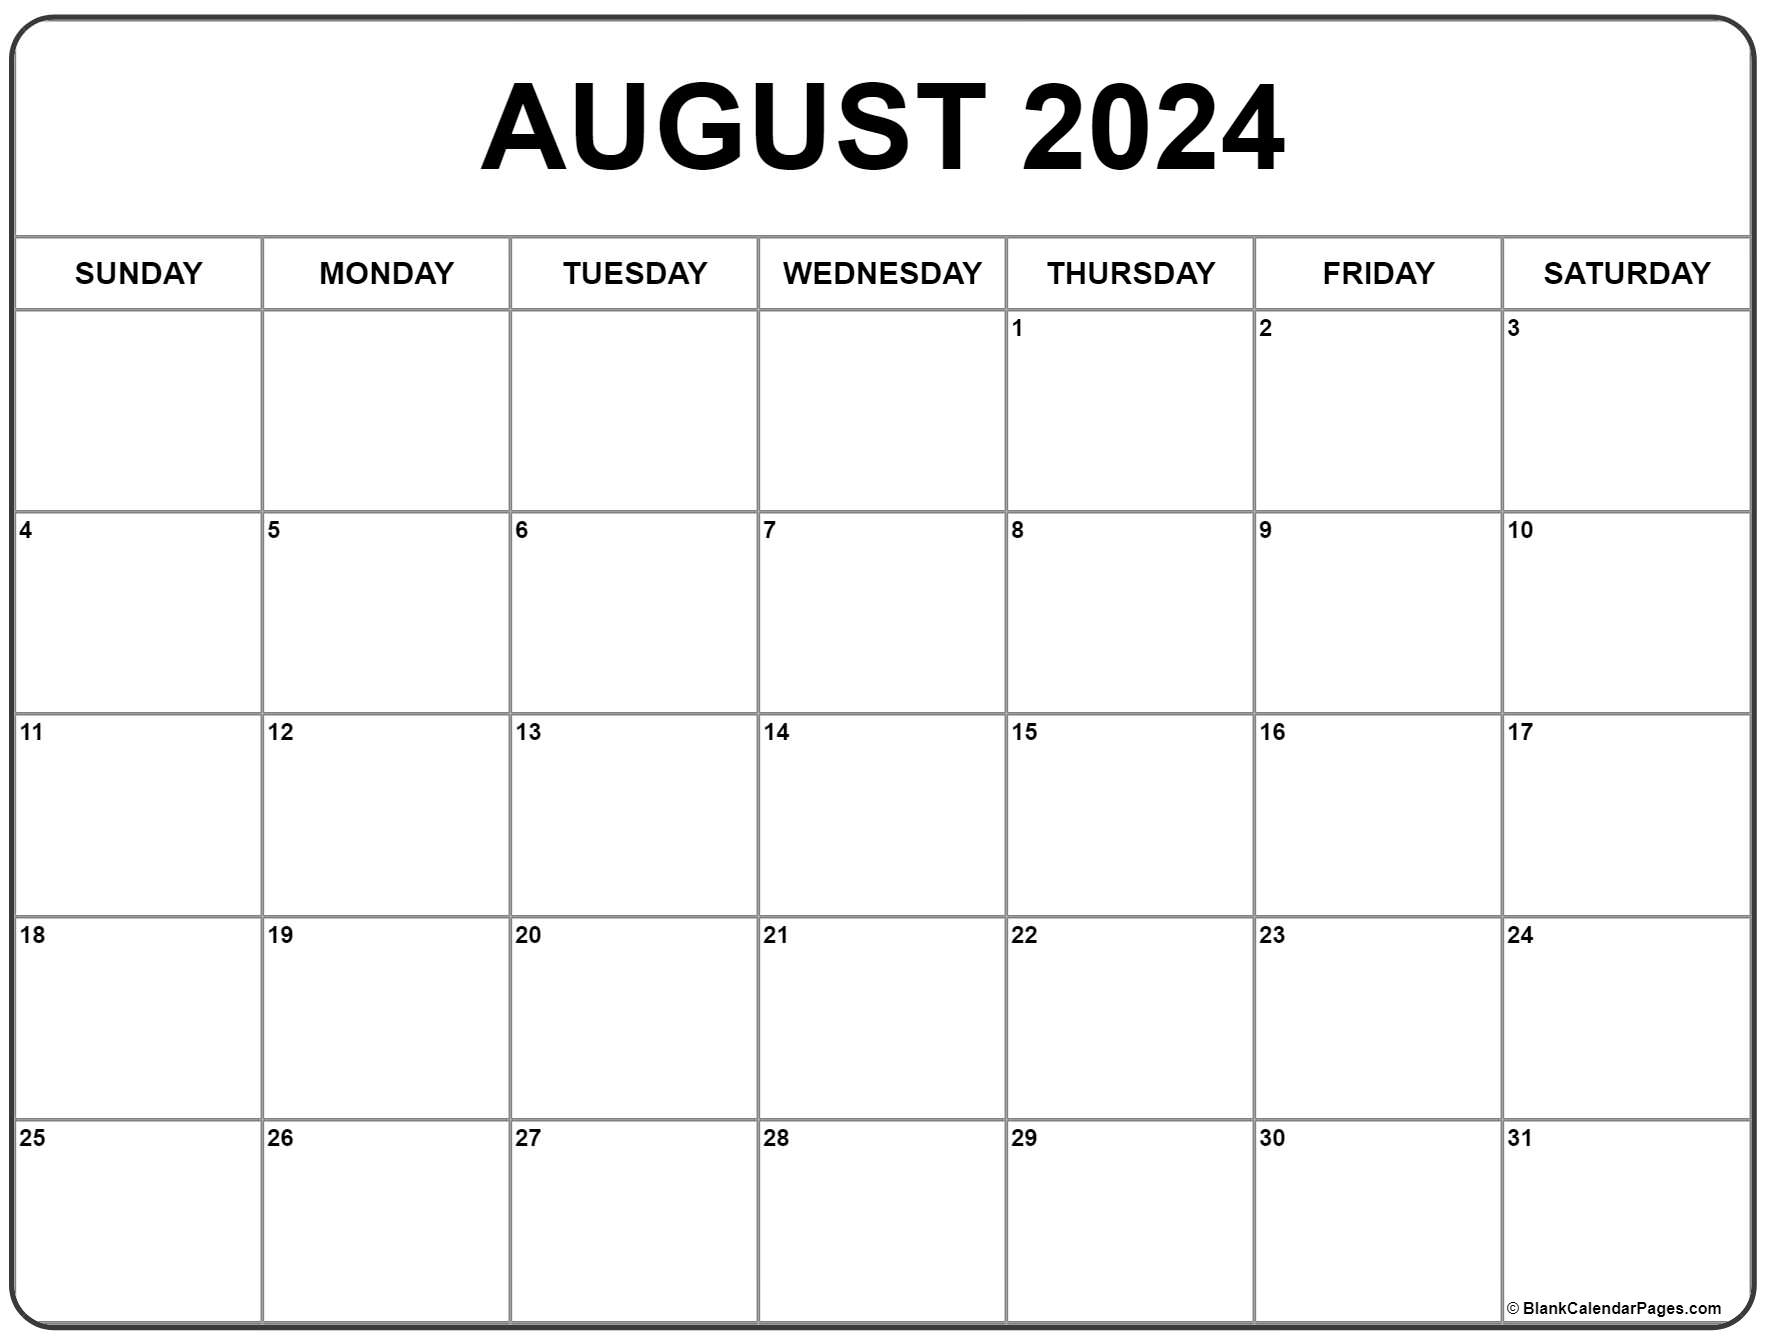 August 2024 Calendar | Free Printable Calendar with Free Printable August 2024 Calendar